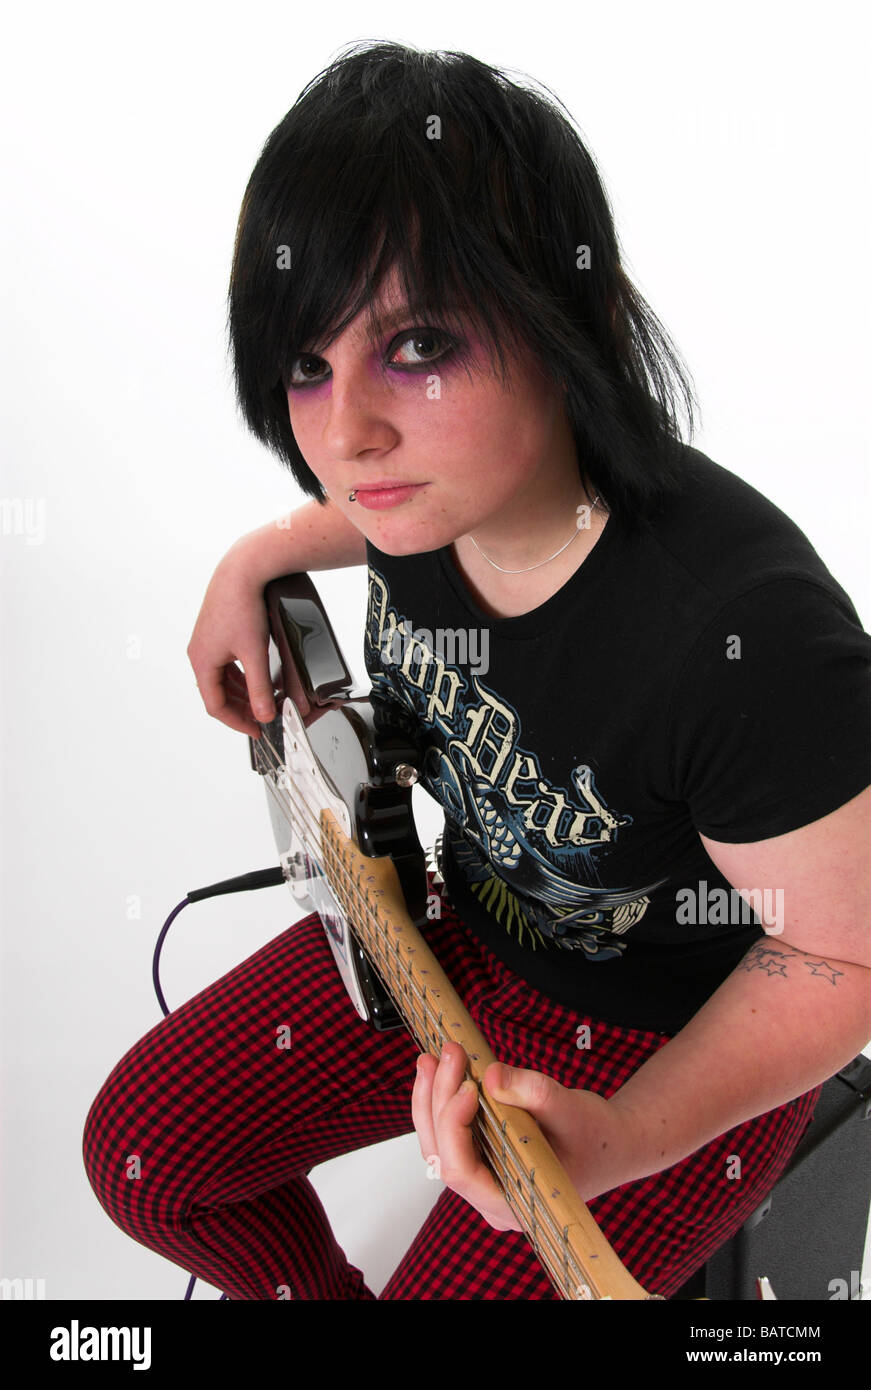 Emo Goth Teenage Girl Playing the Bass Guitar Stock Photo